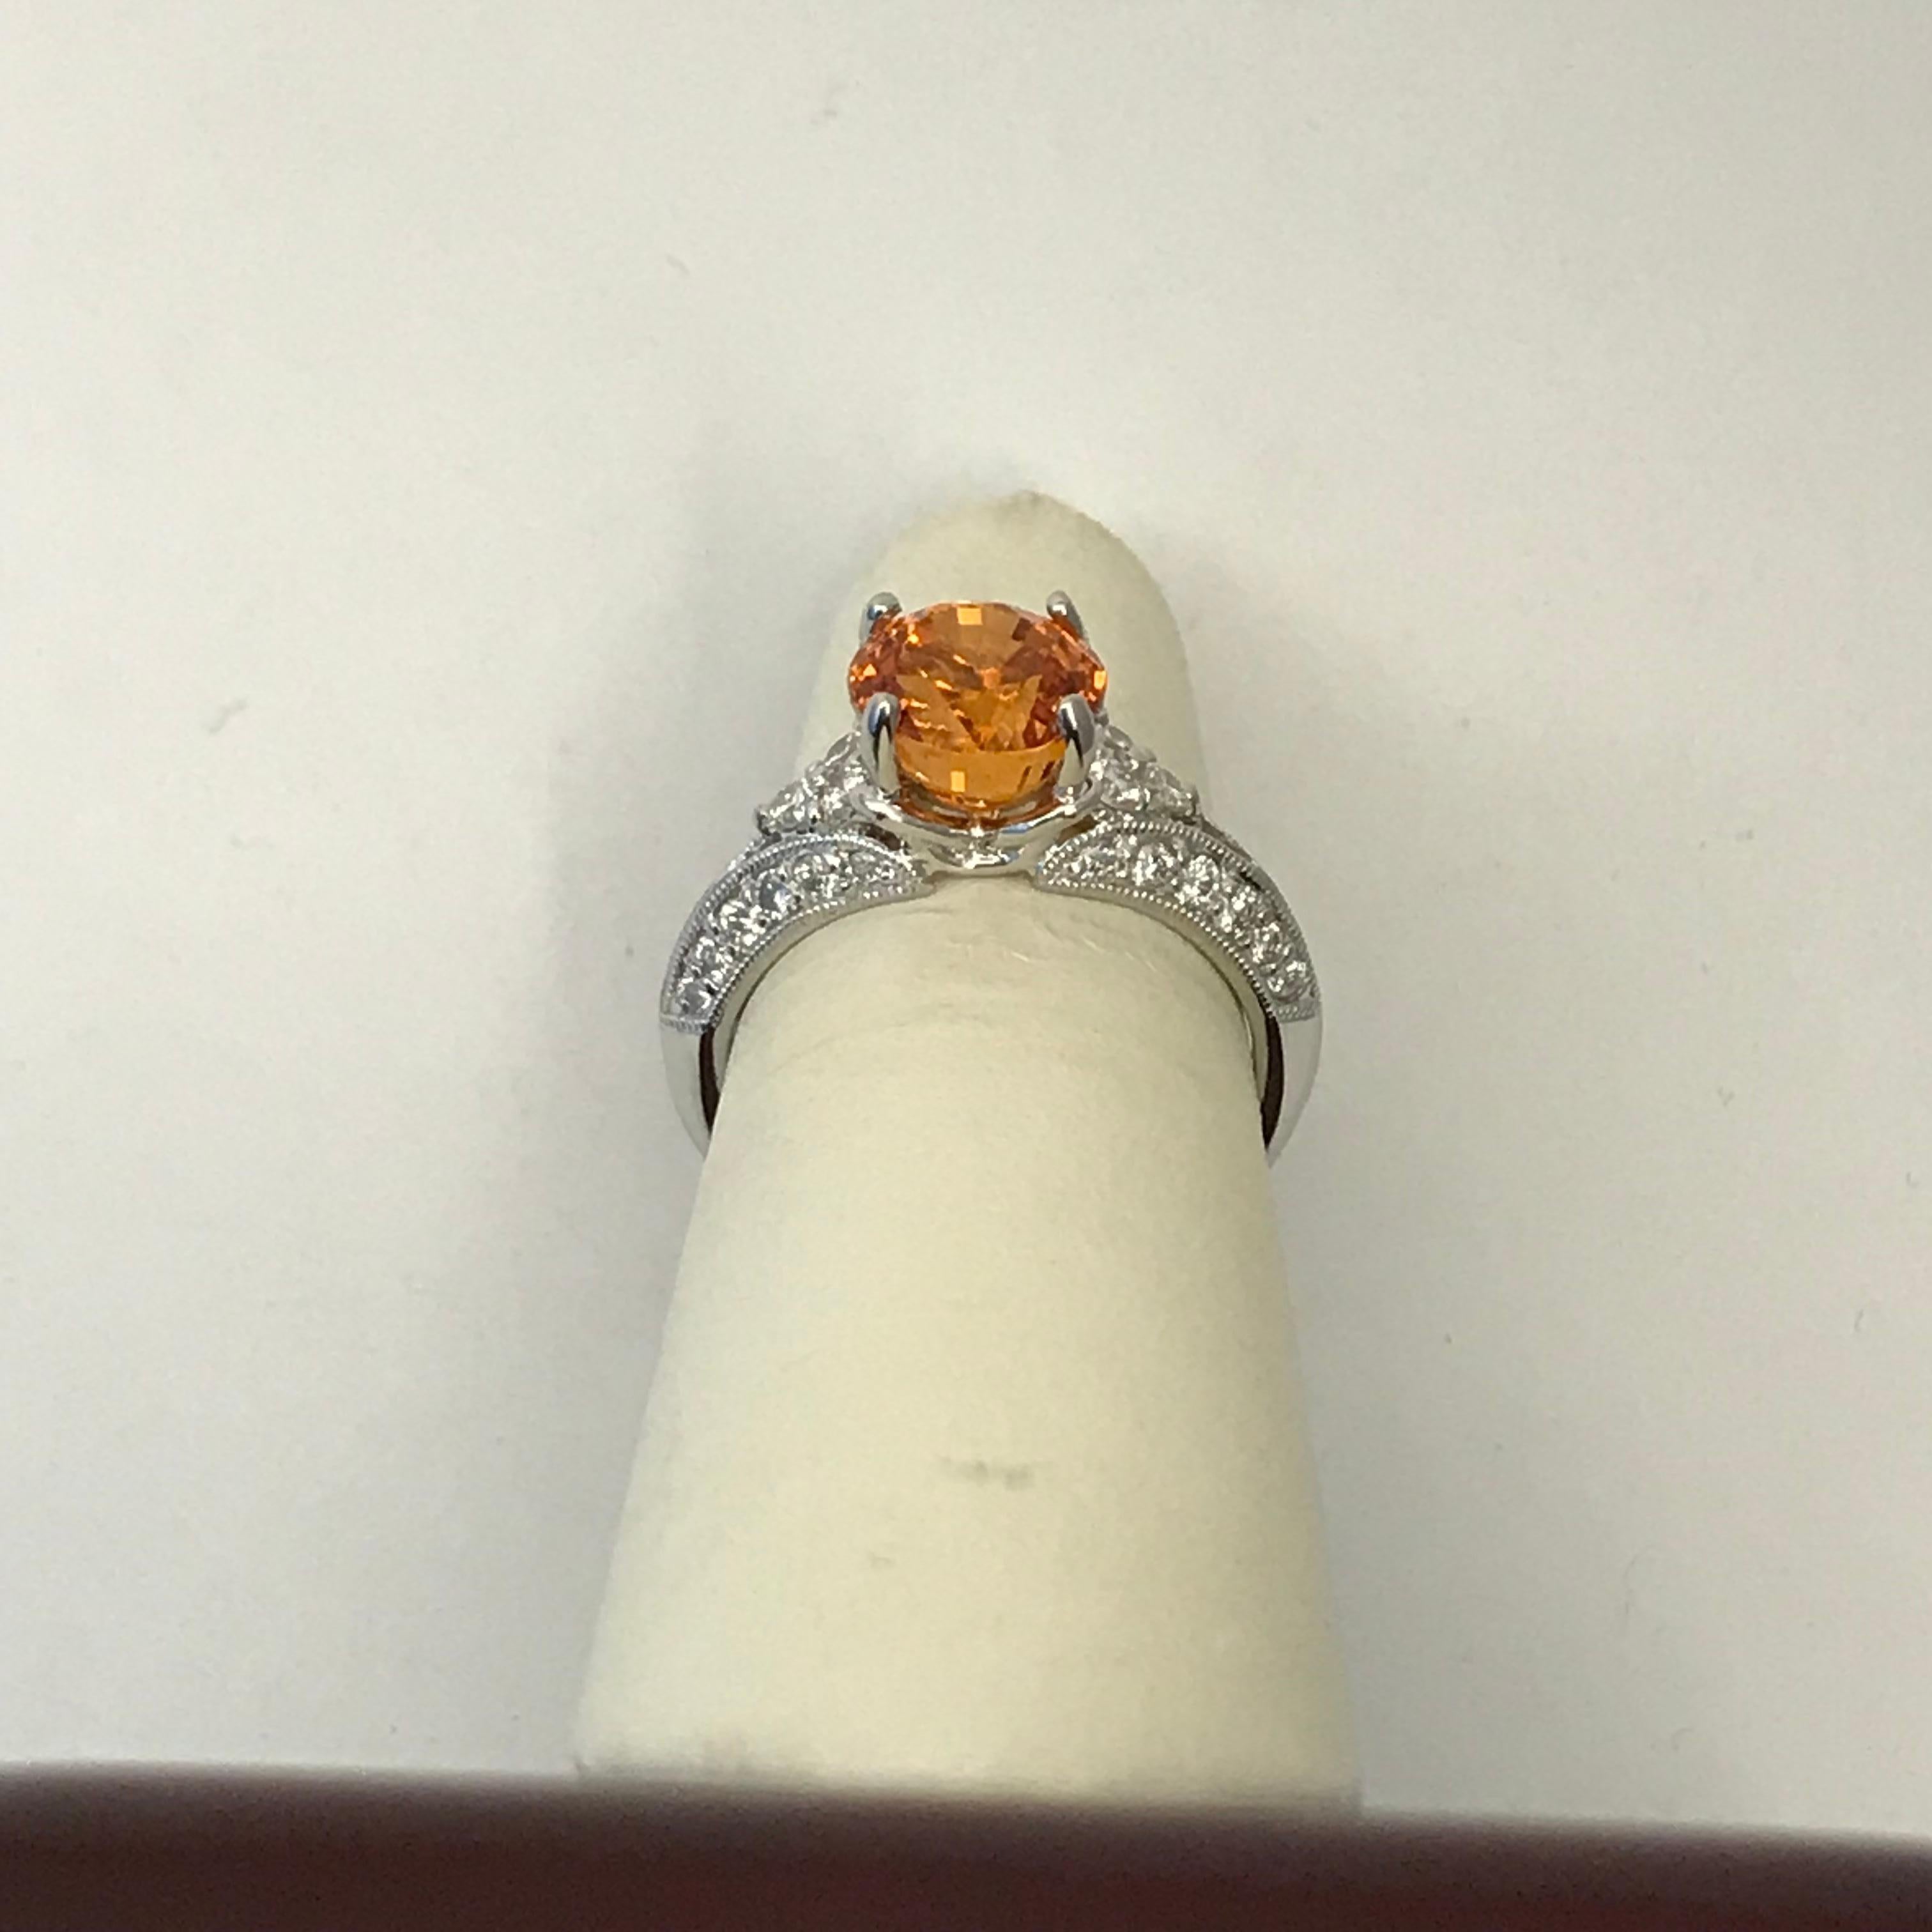 3.31 Carat Orange Spessartite Garnet Ring Set in Platinum For Sale 3